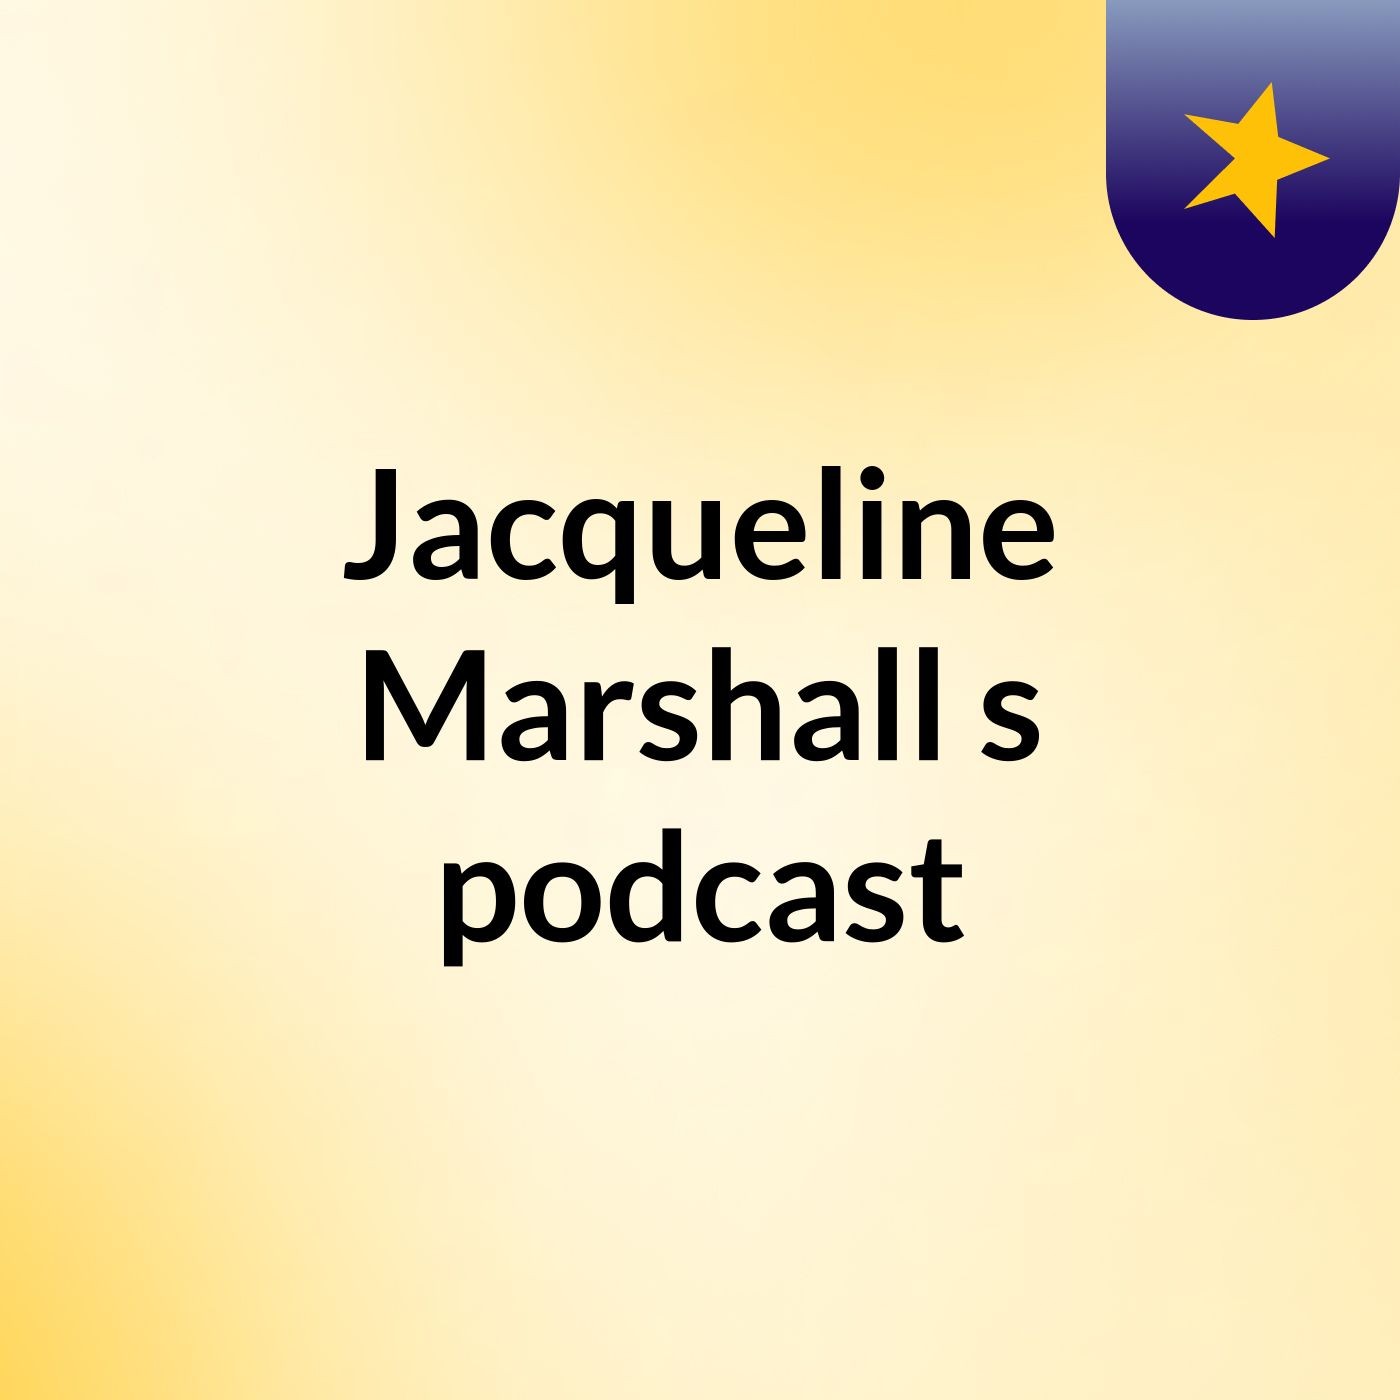 Jacqueline Marshall's podcast